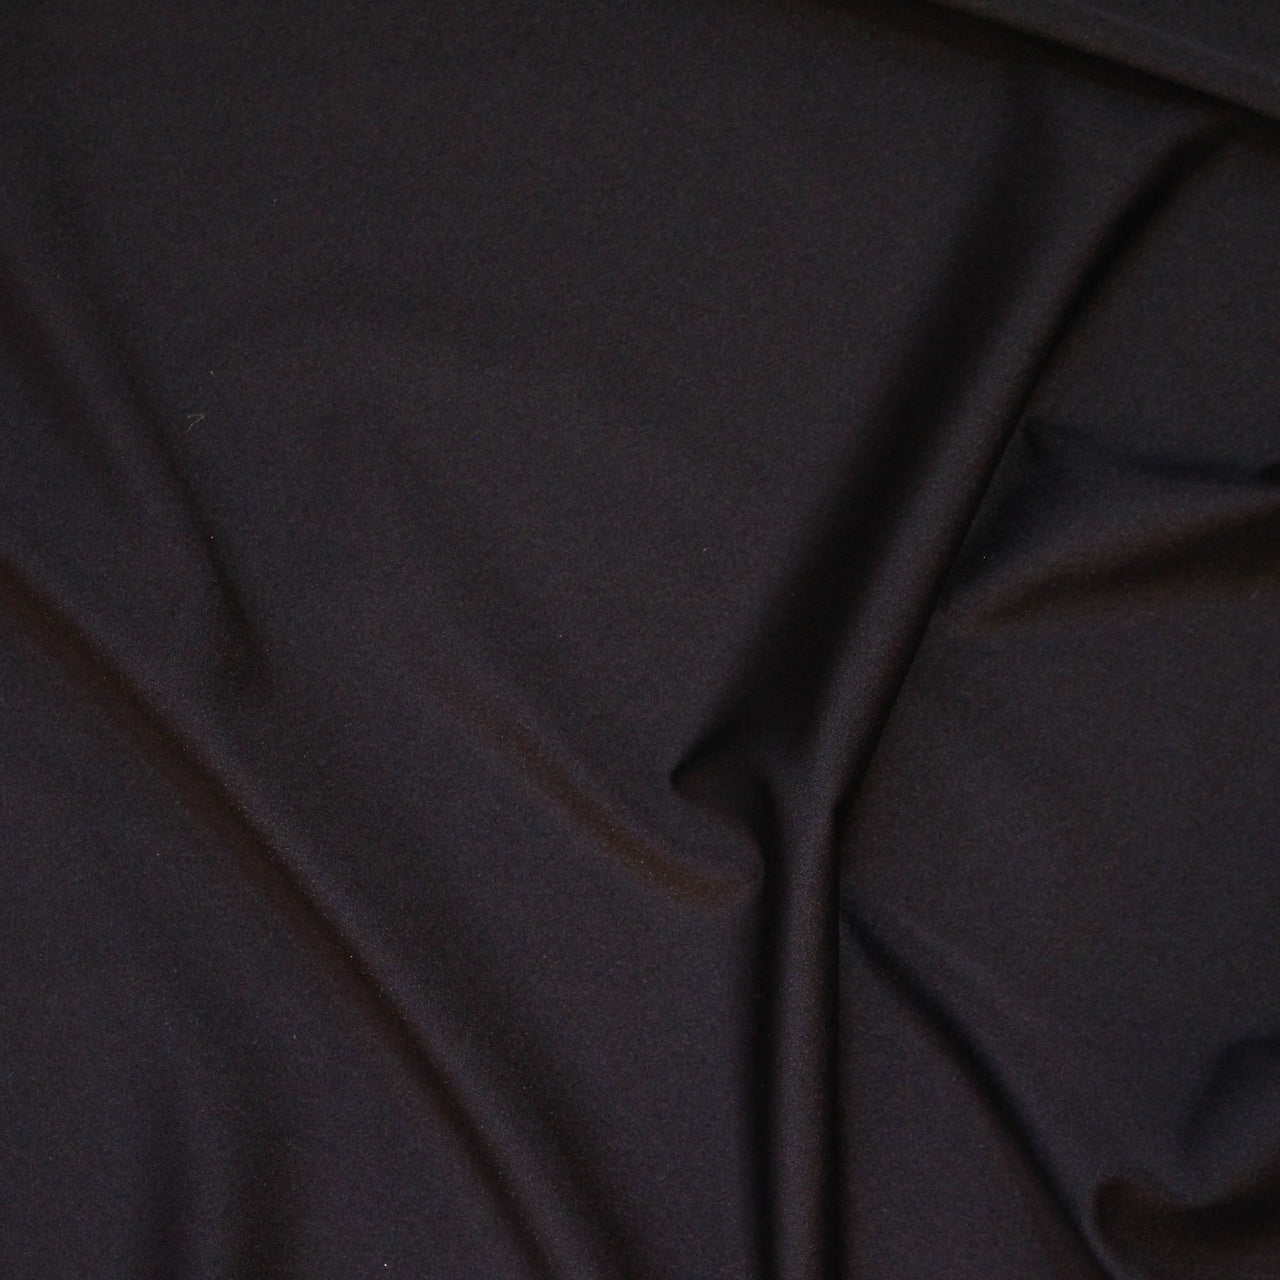 Black - Nylon Spandex Fabric - 4 Way All Way Stretch Superior Quality - Leotards, Dancewear